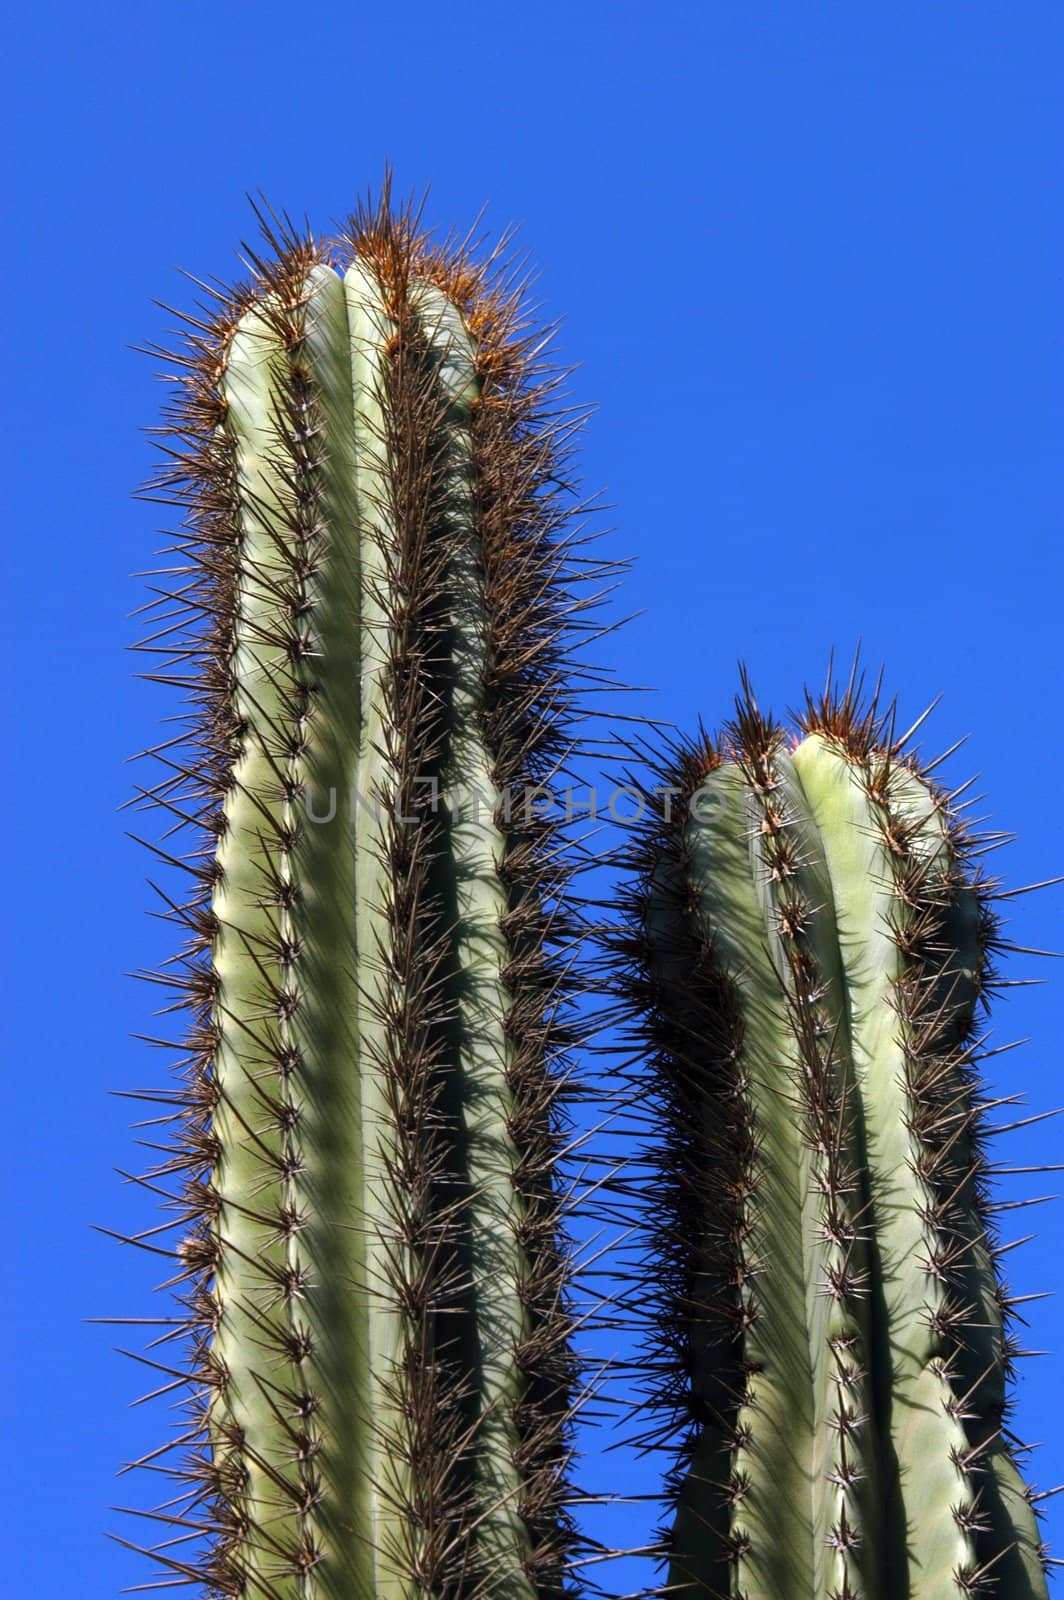 Detail of cactus growing in Puerto Escondido by haak78